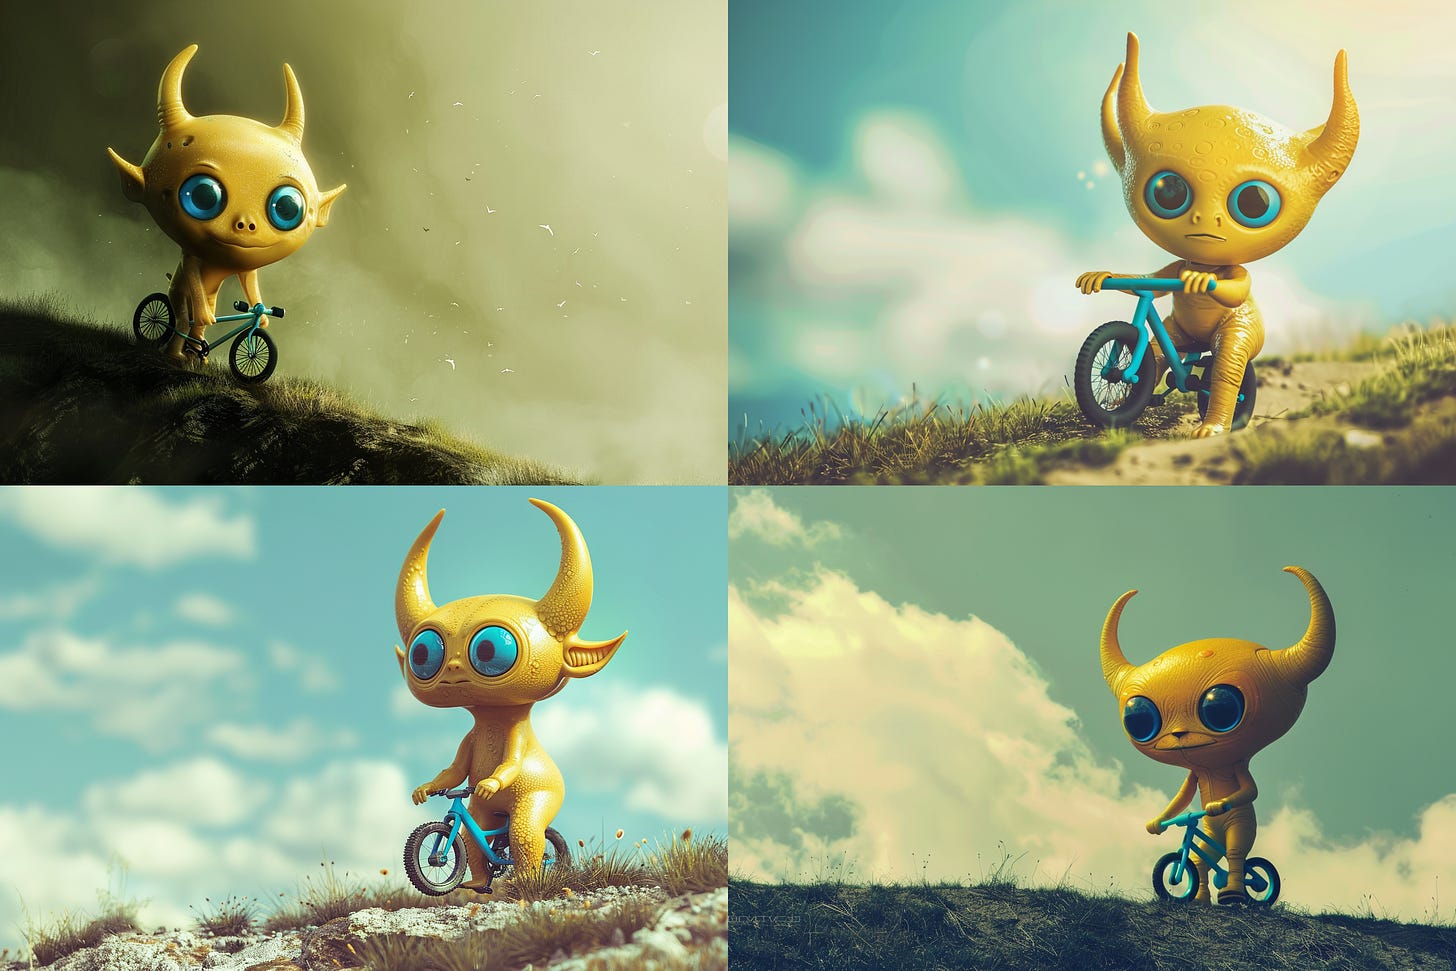 Cute yellow alien with blue horns riding a bike